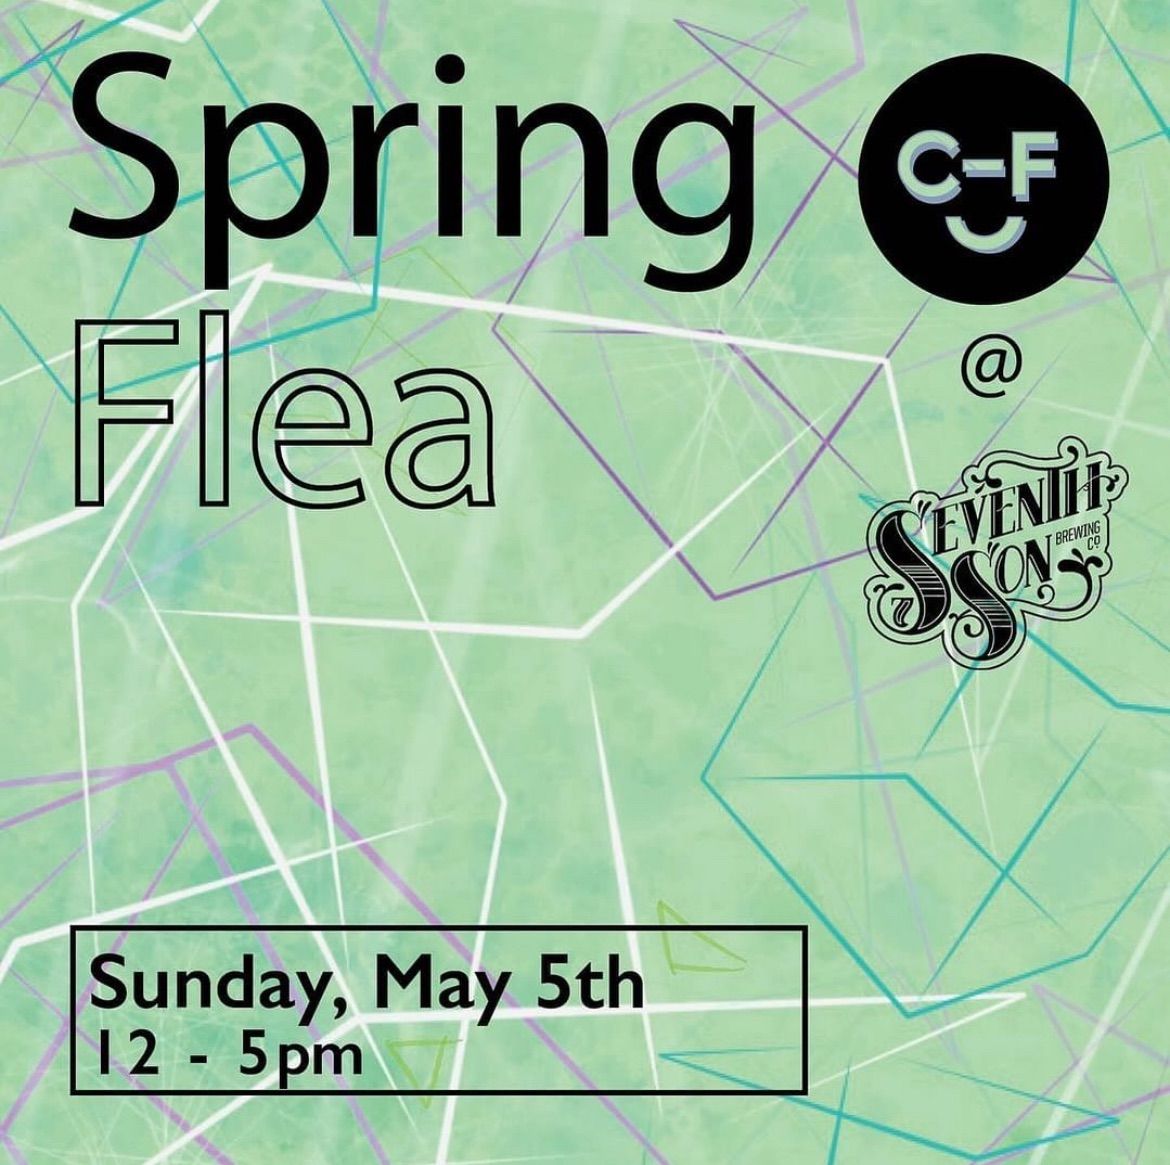 Spring Flea @ Seventh Son 